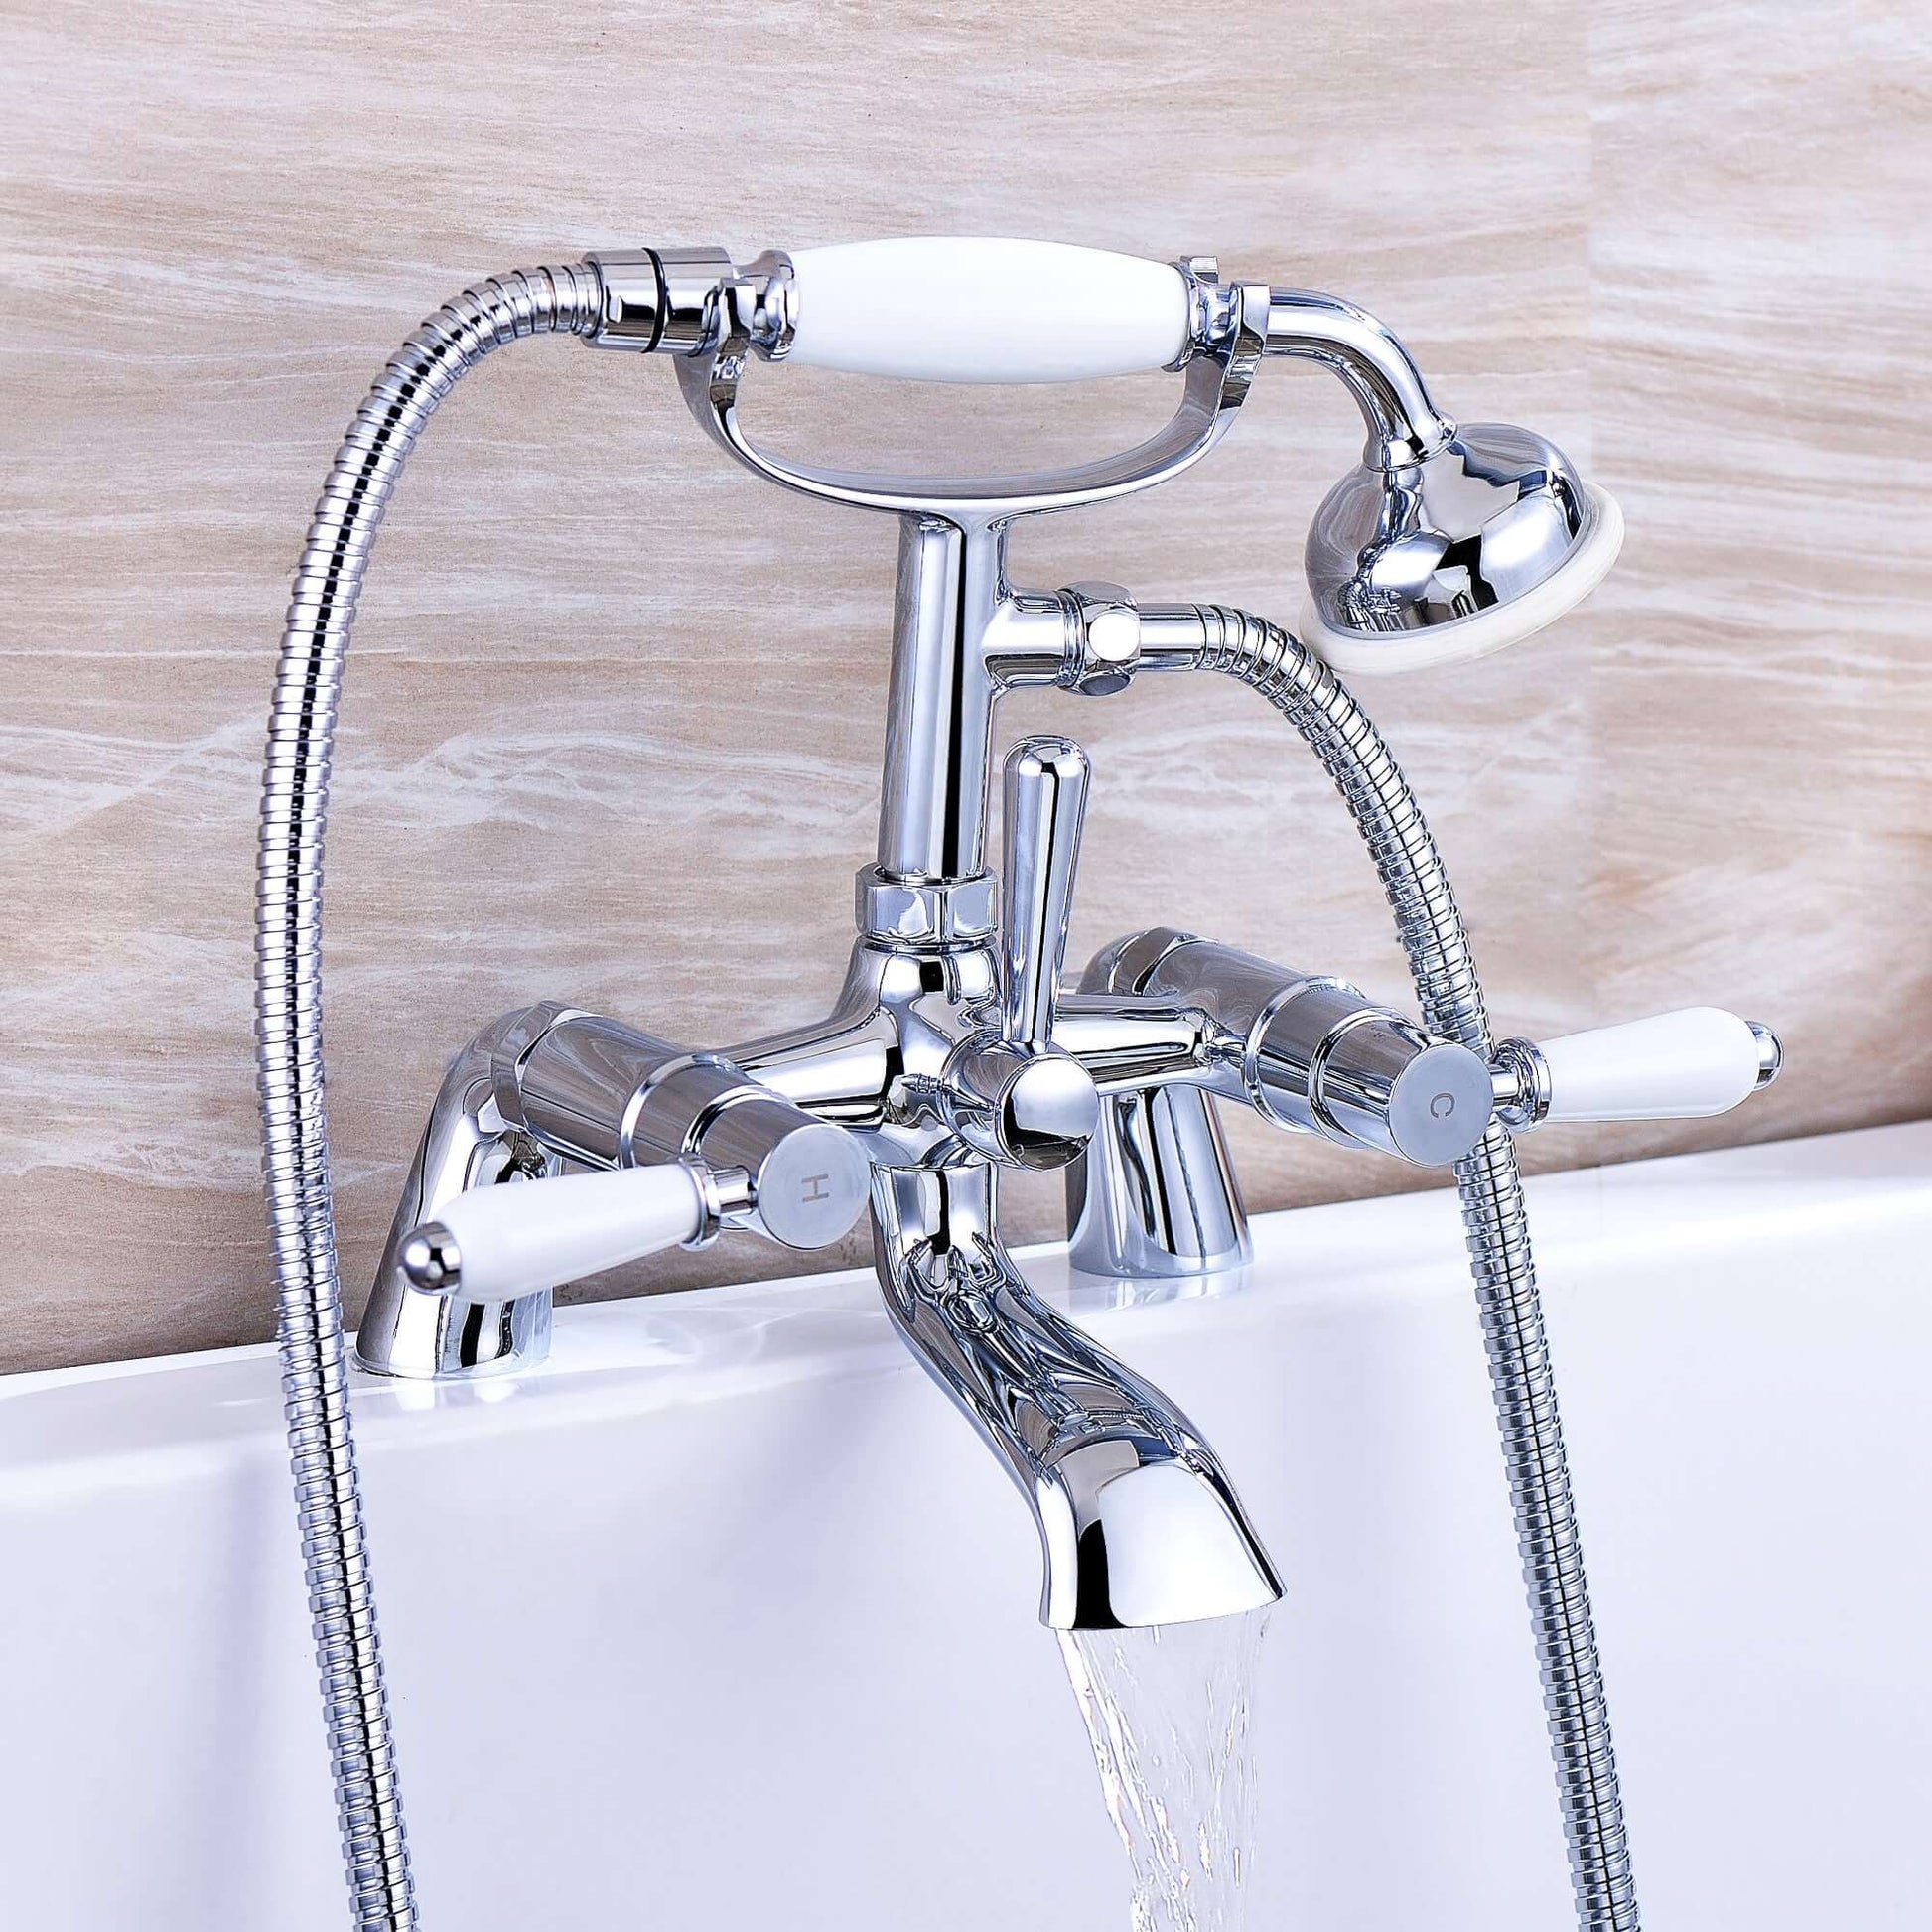 Downton bath shower mixer tap with white ceramic levers - chrome - Taps